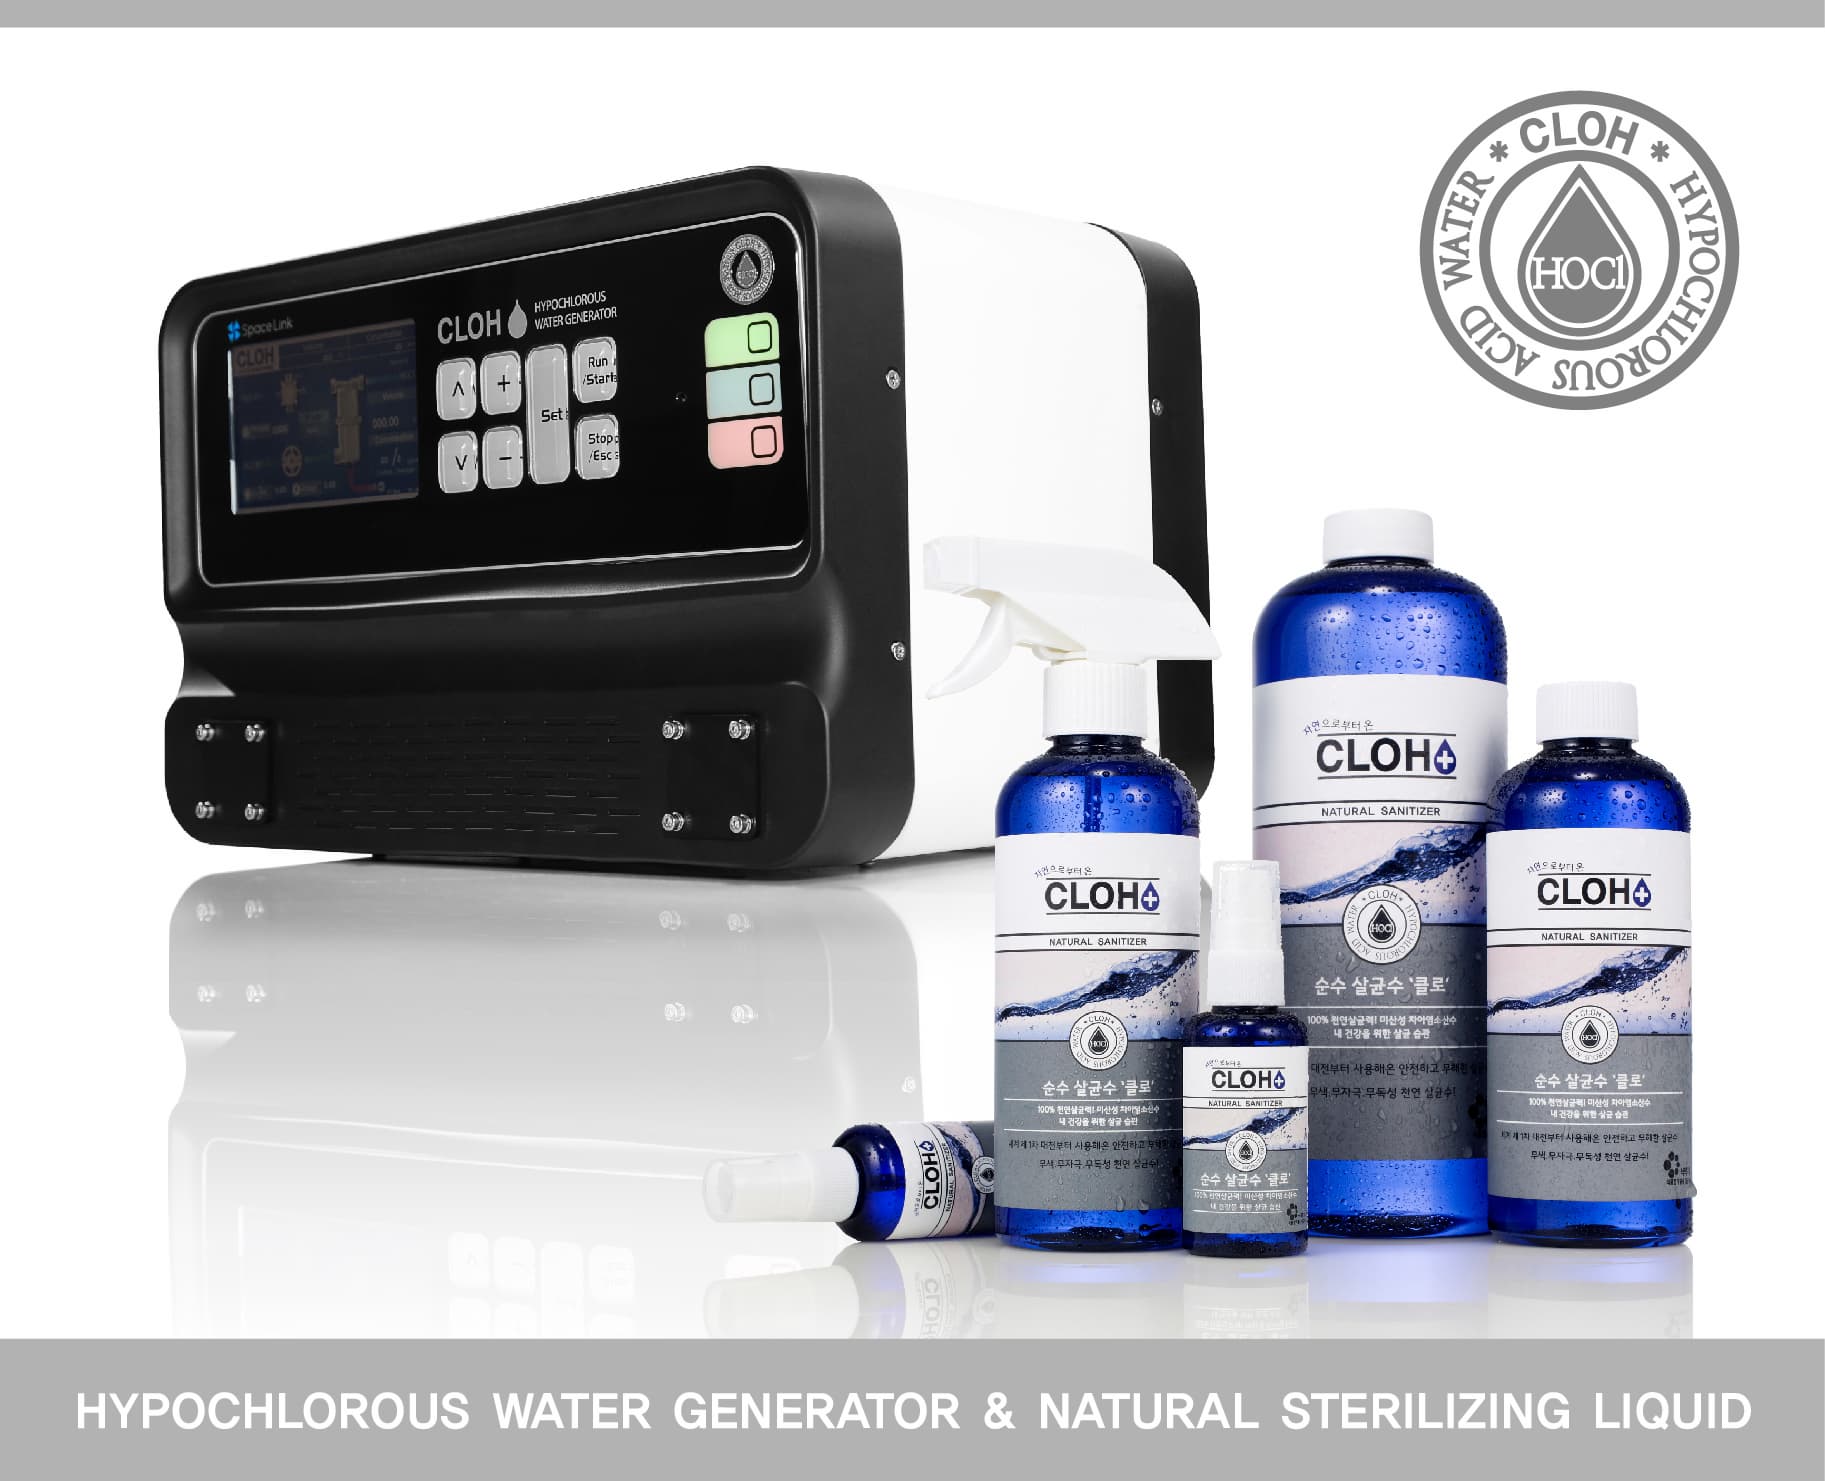 CLOH - Hypochlorous Water Generator